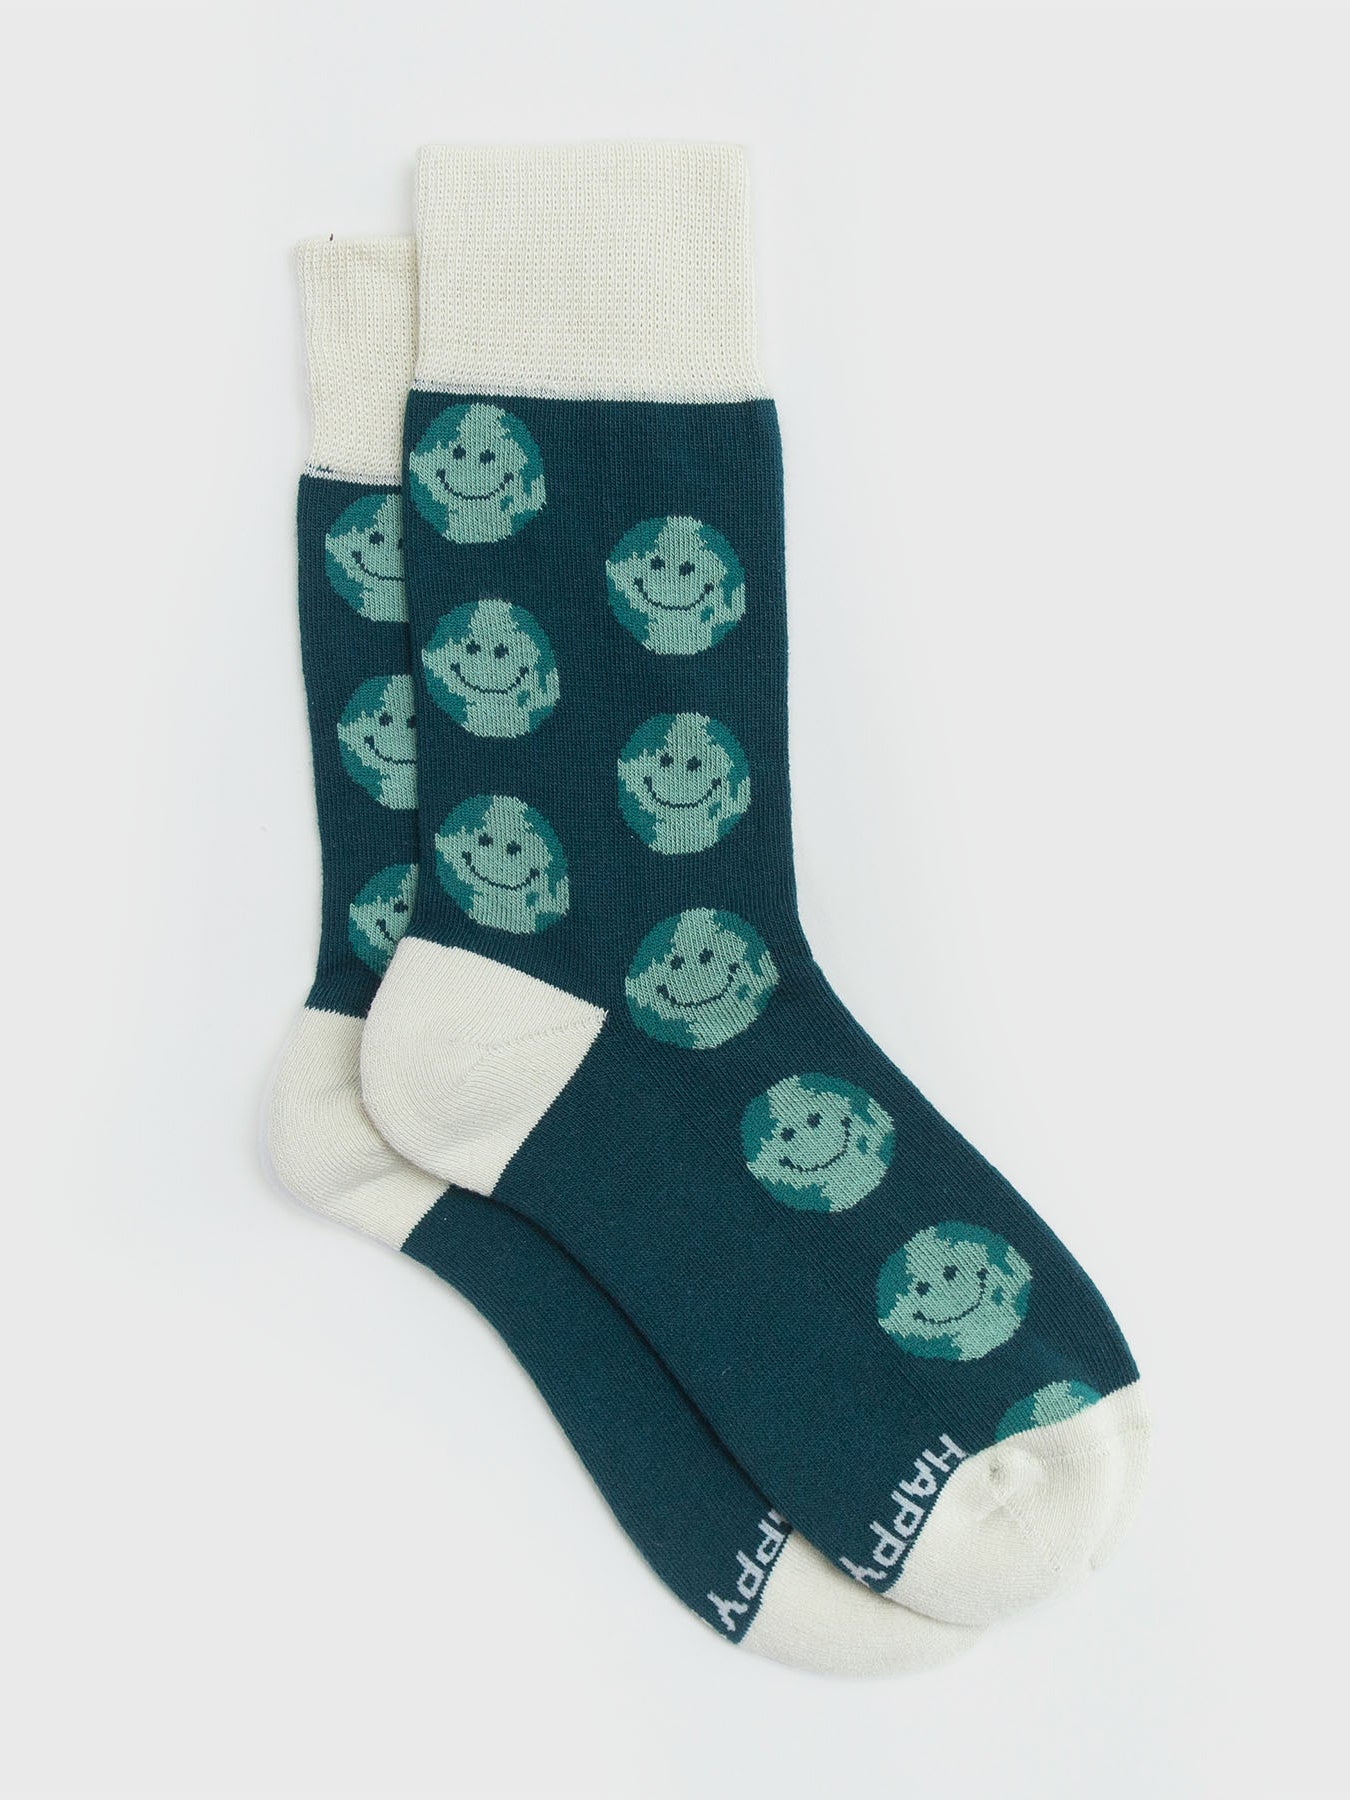 Smiley Planet Socks